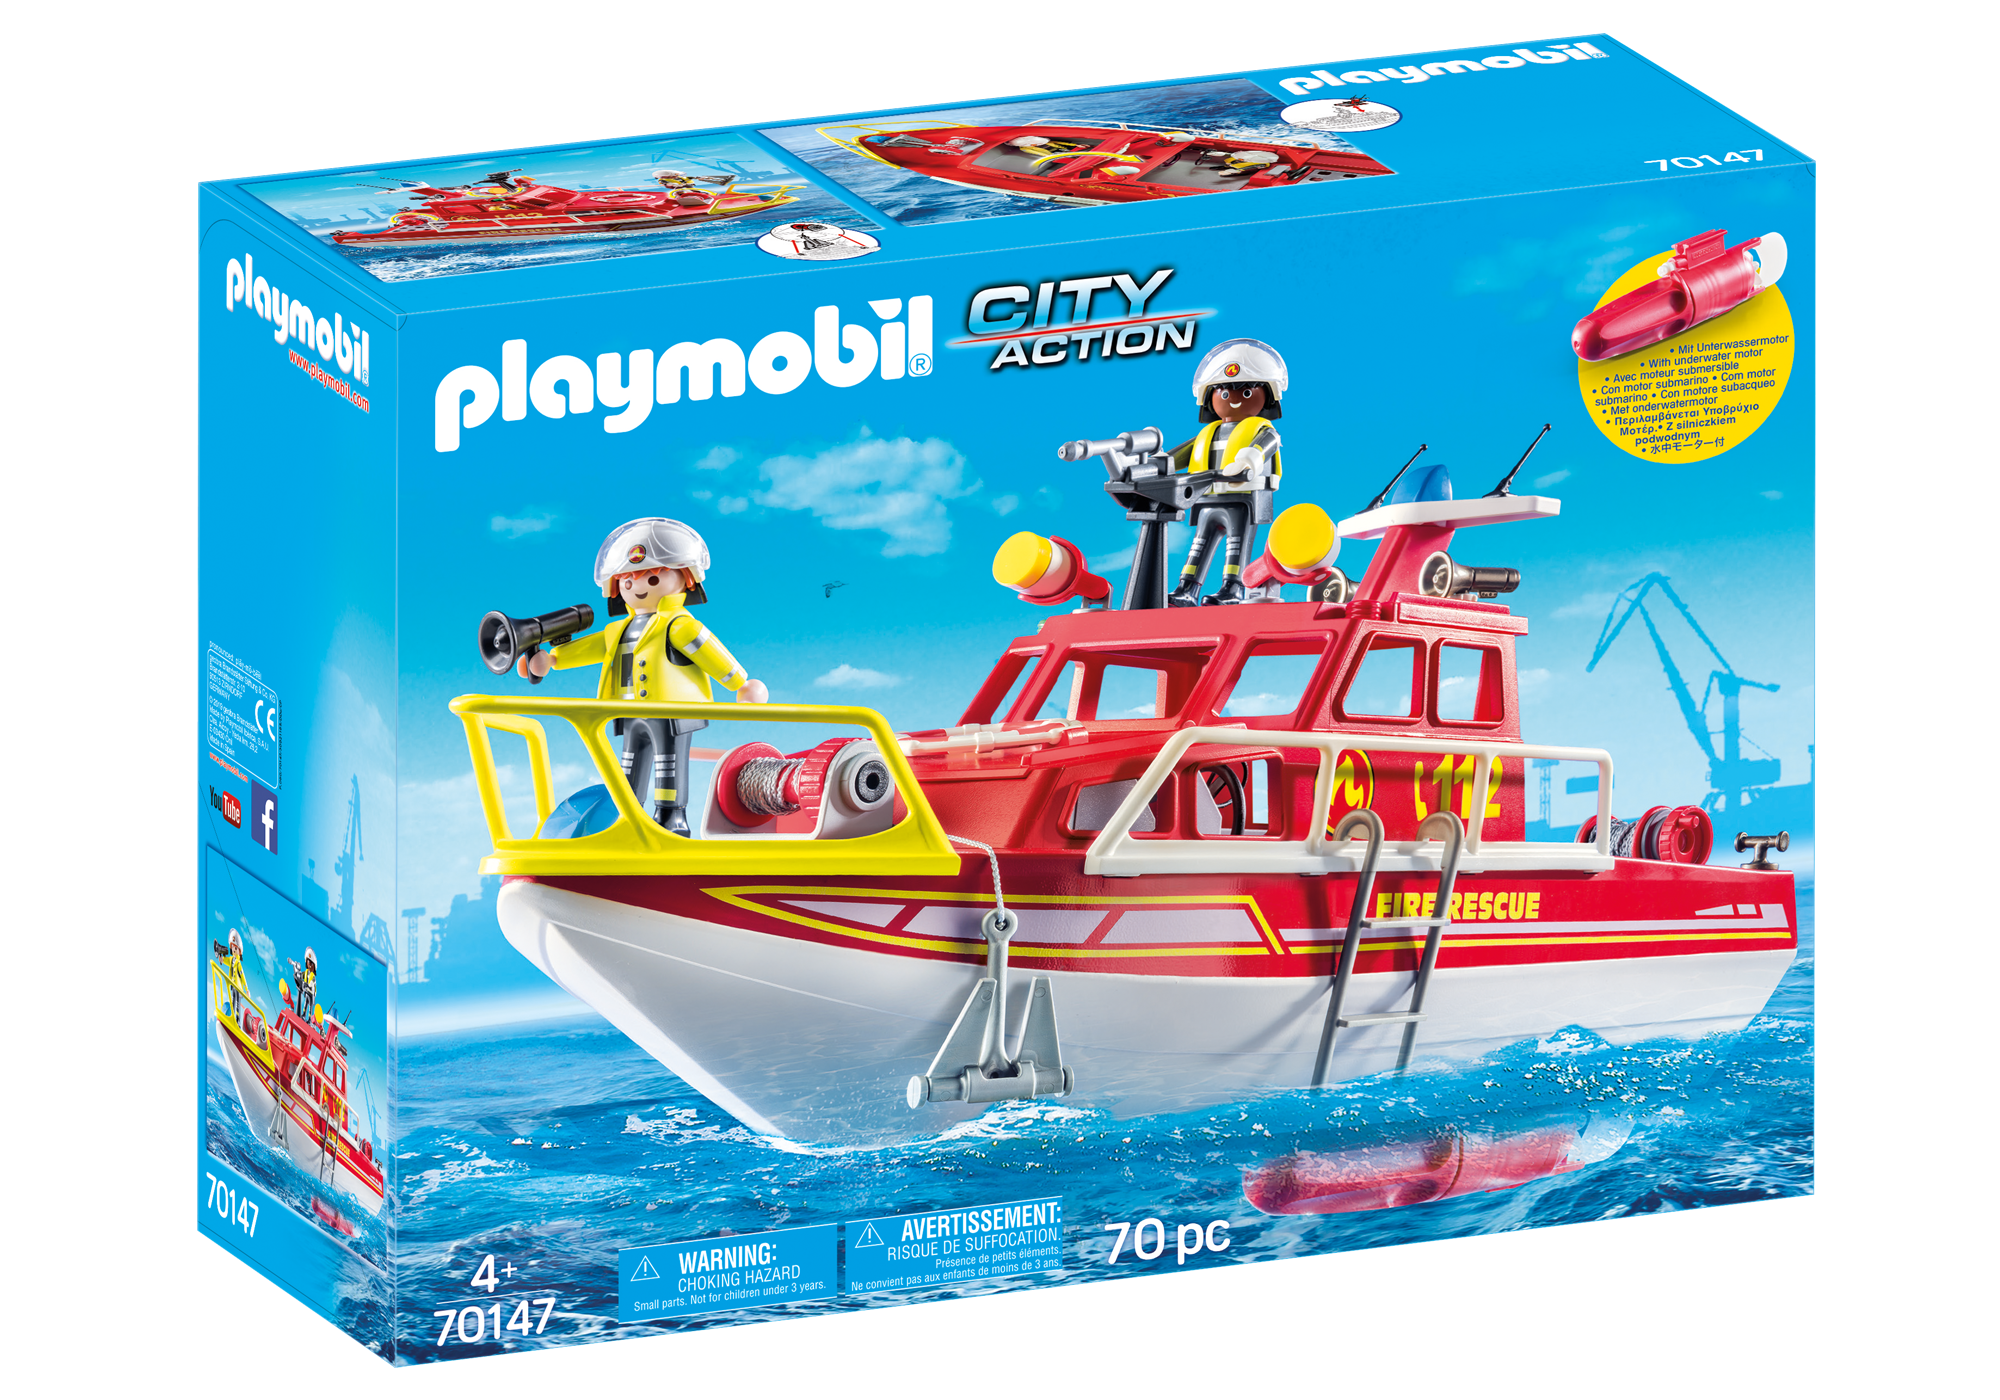 bateau playmobil